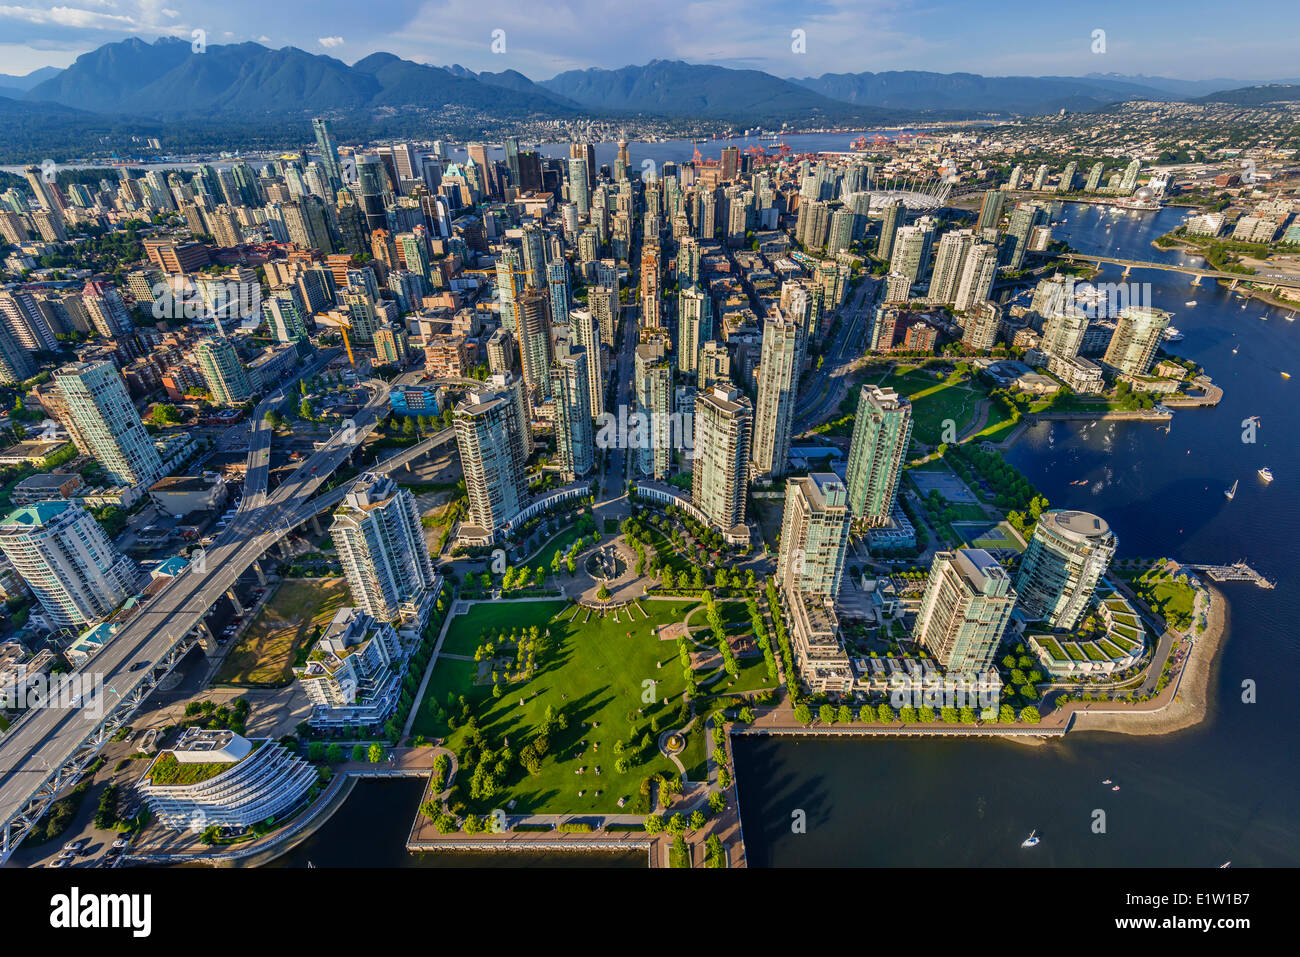 George Wainborn Park. Vancouver. Stock Photo